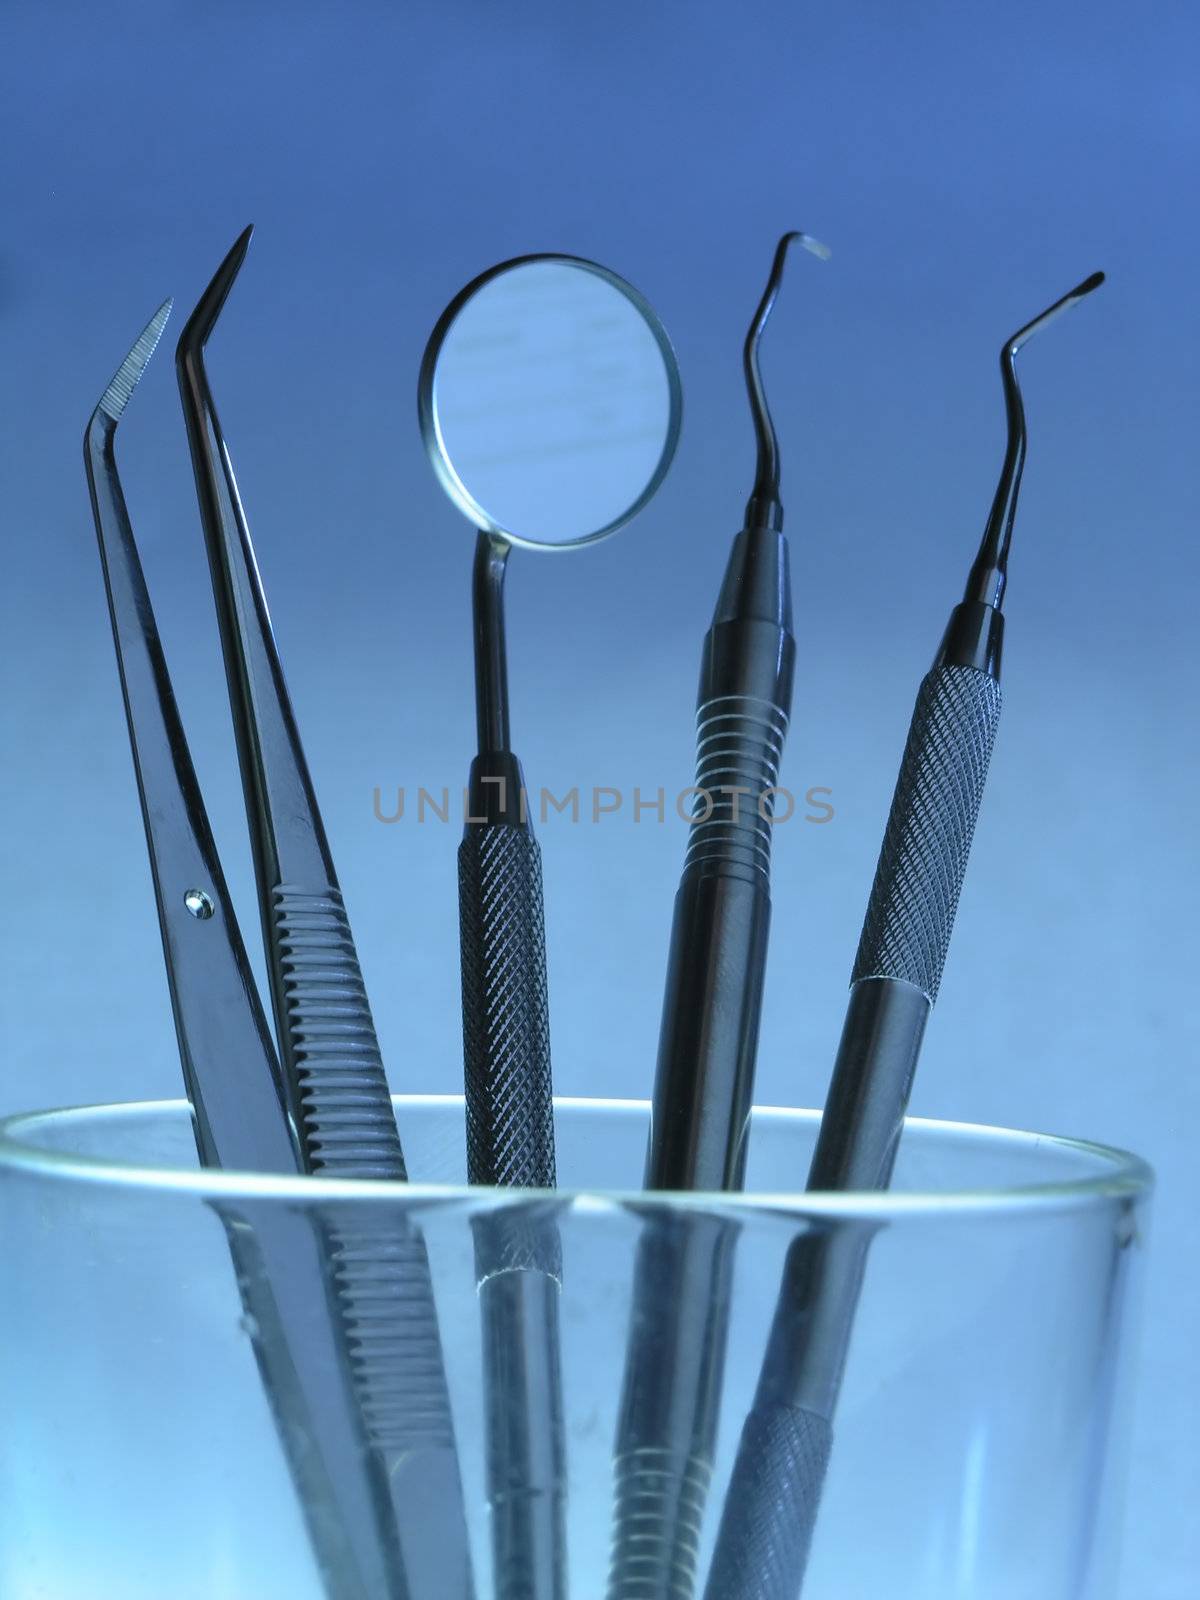 Dental Instruments by adamr